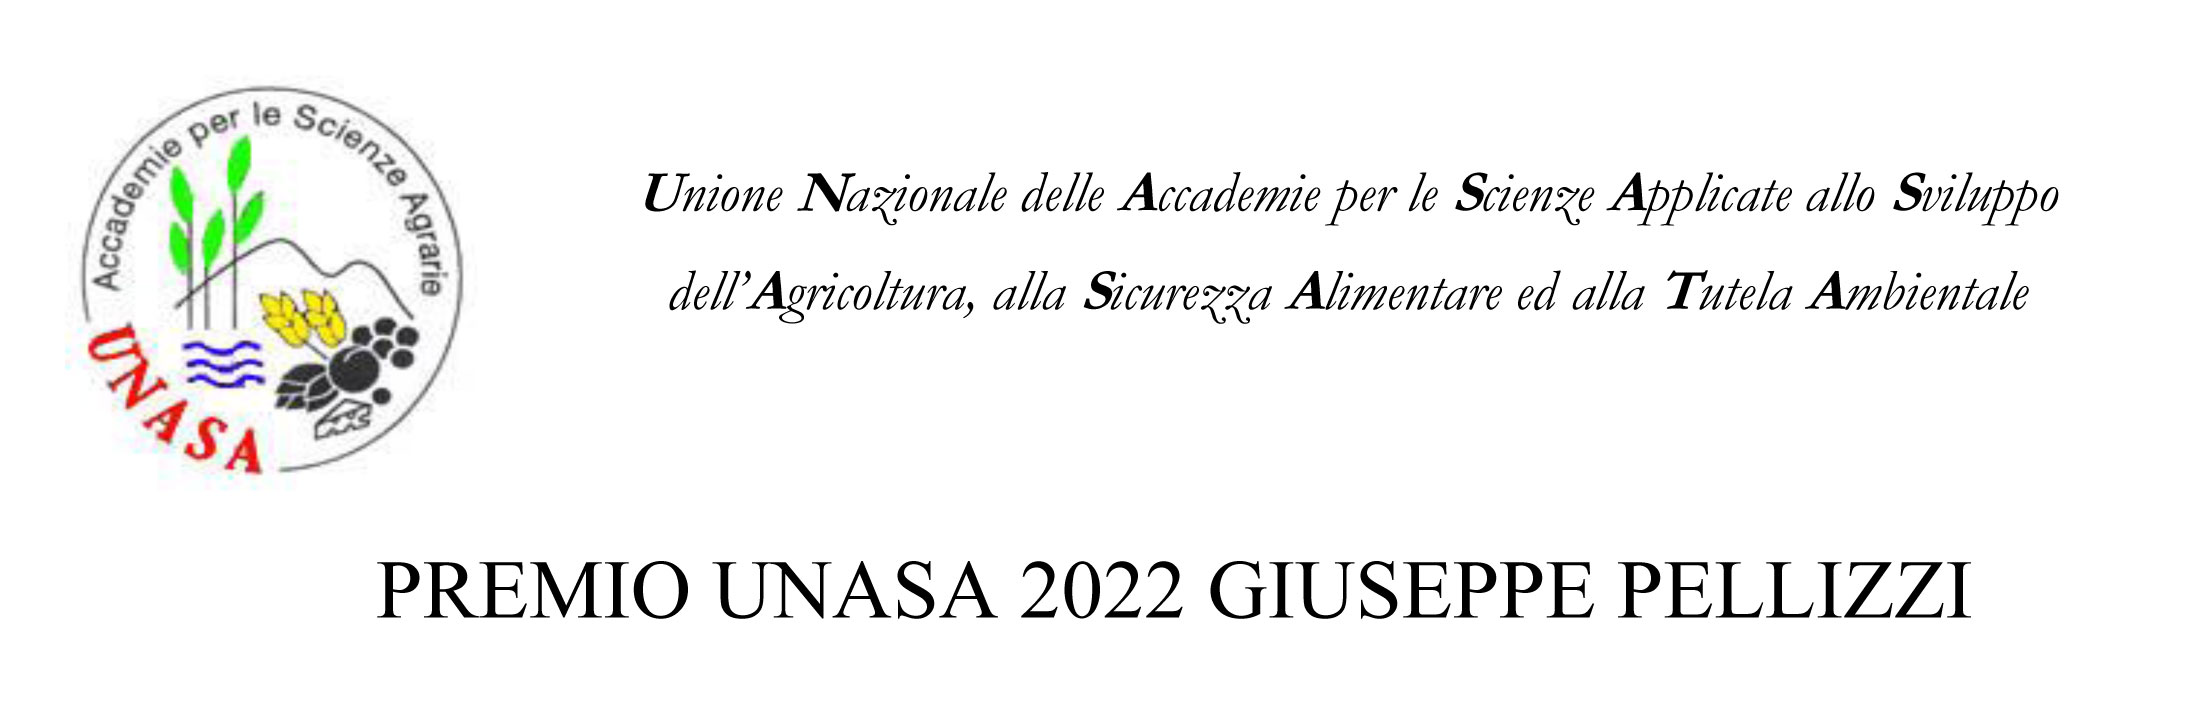 Premio-UNASA-2022